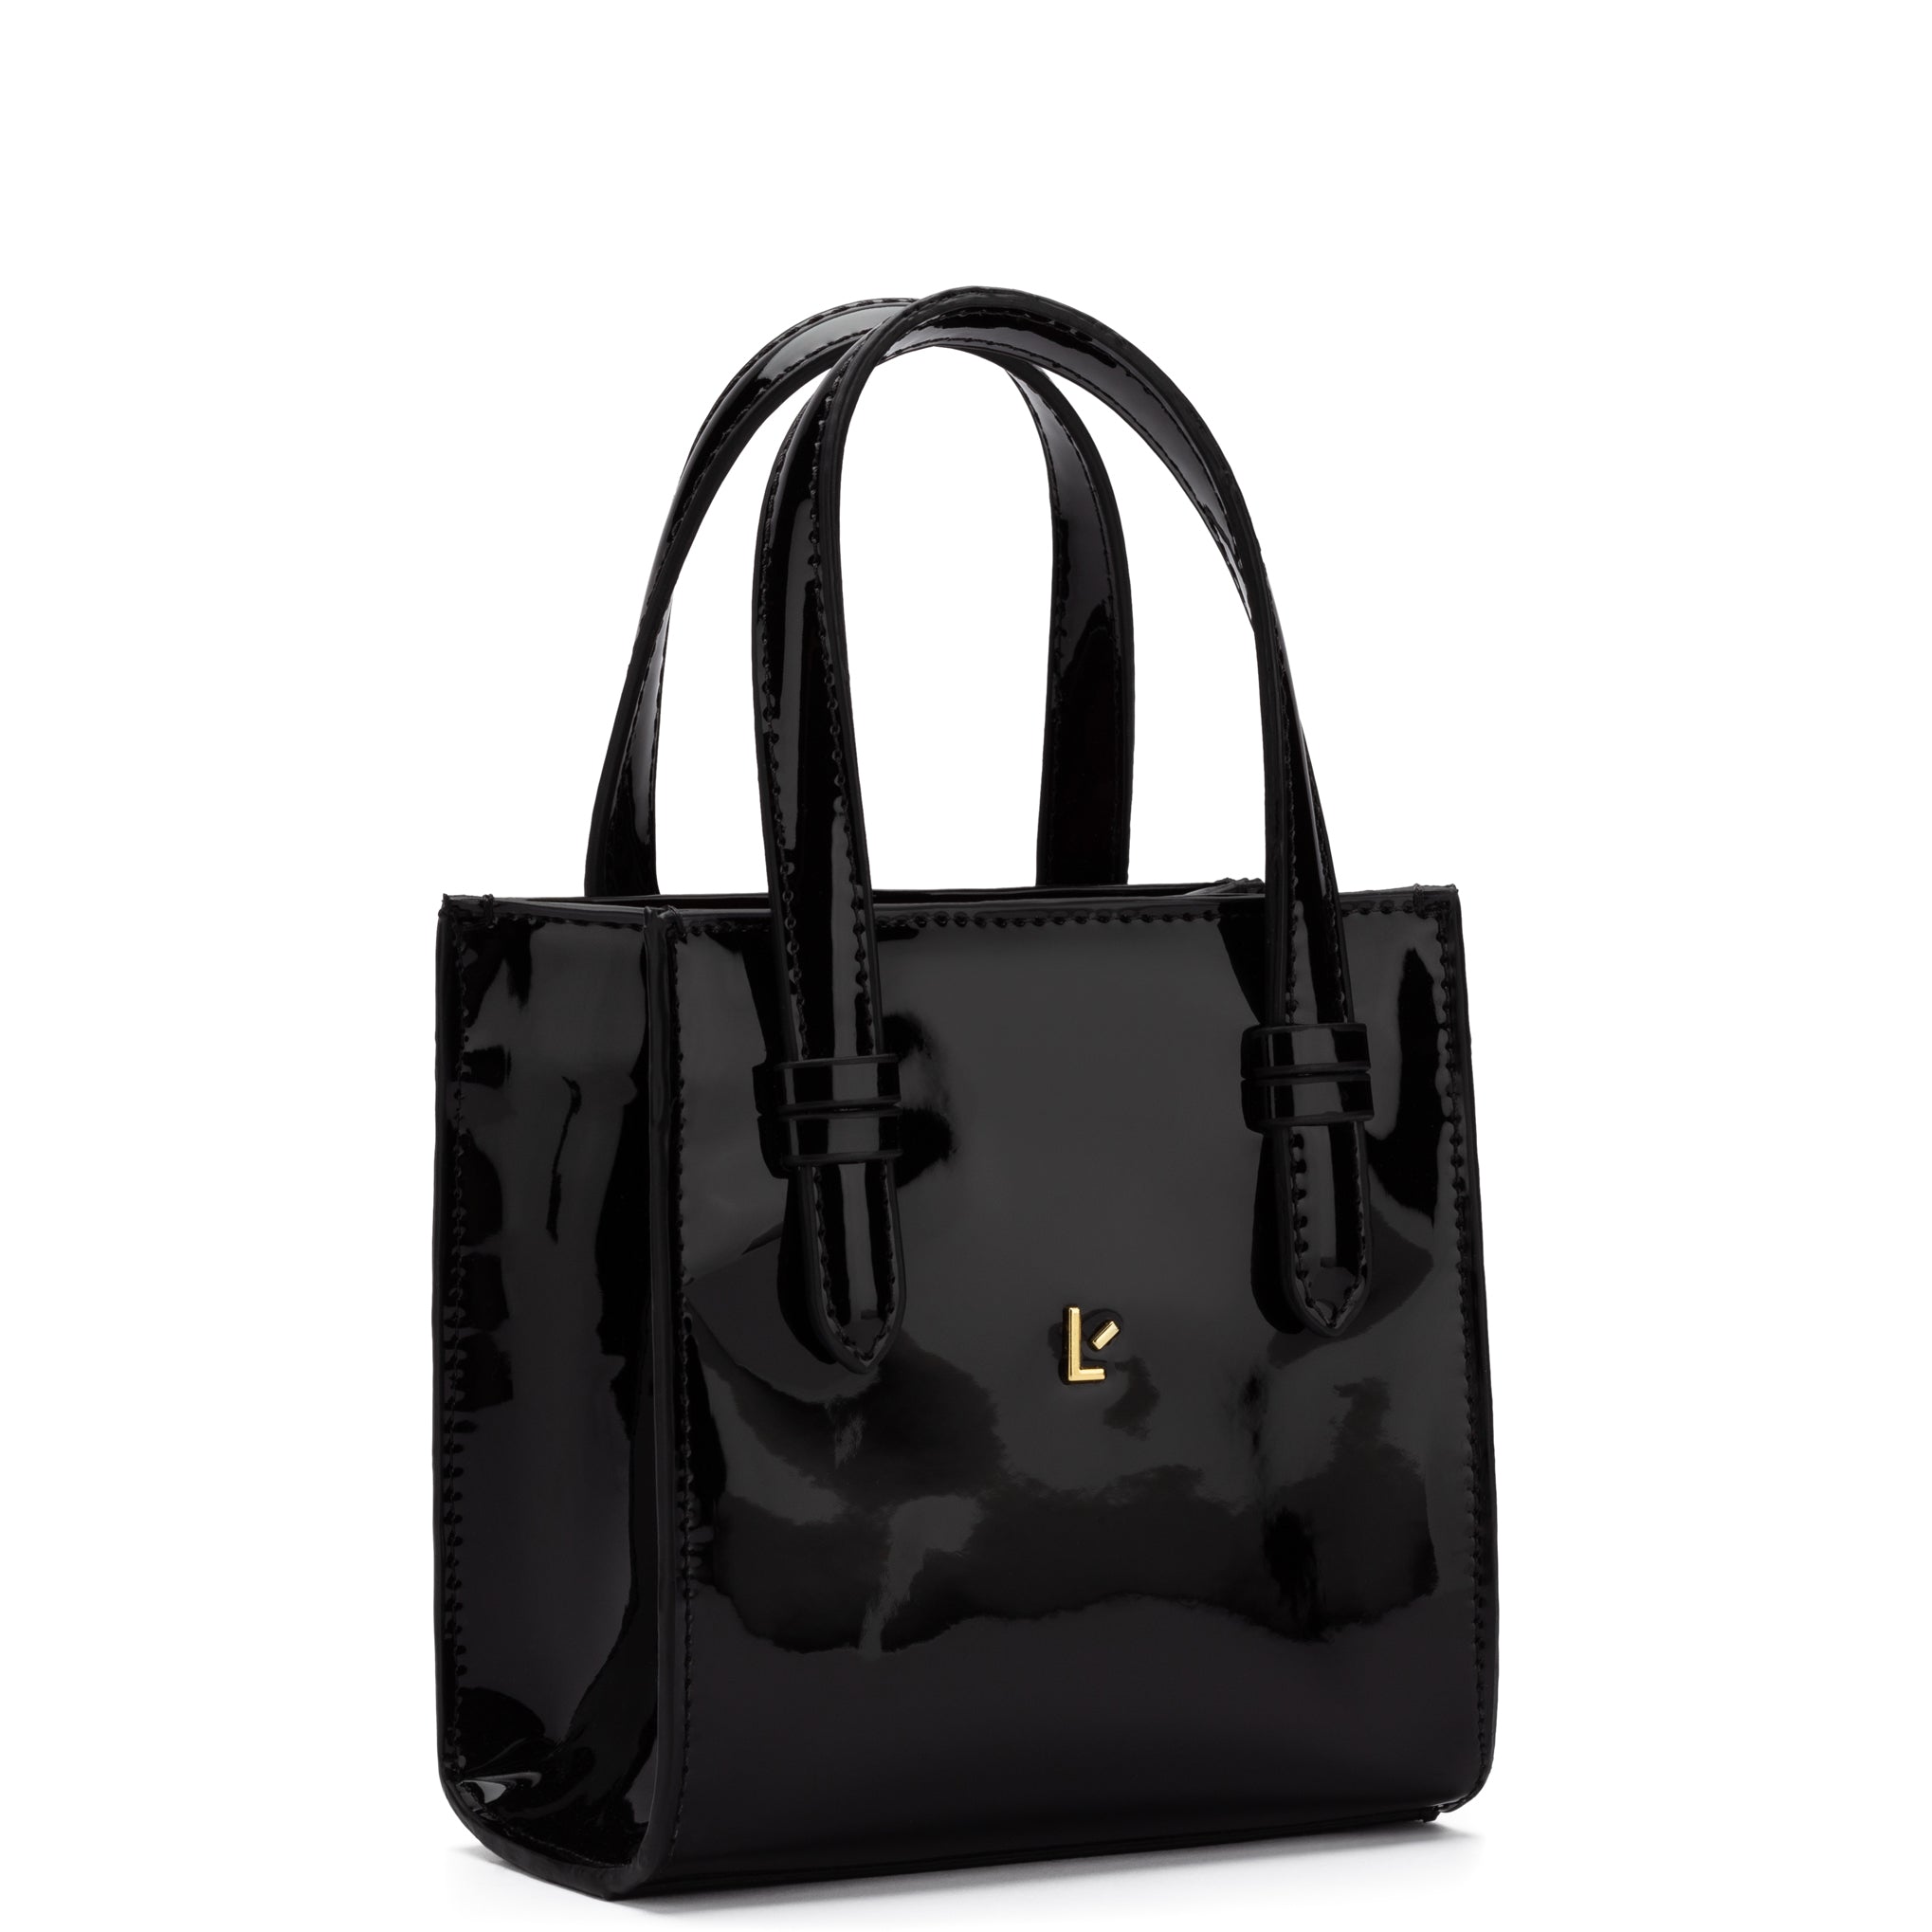 louis black tote handbag